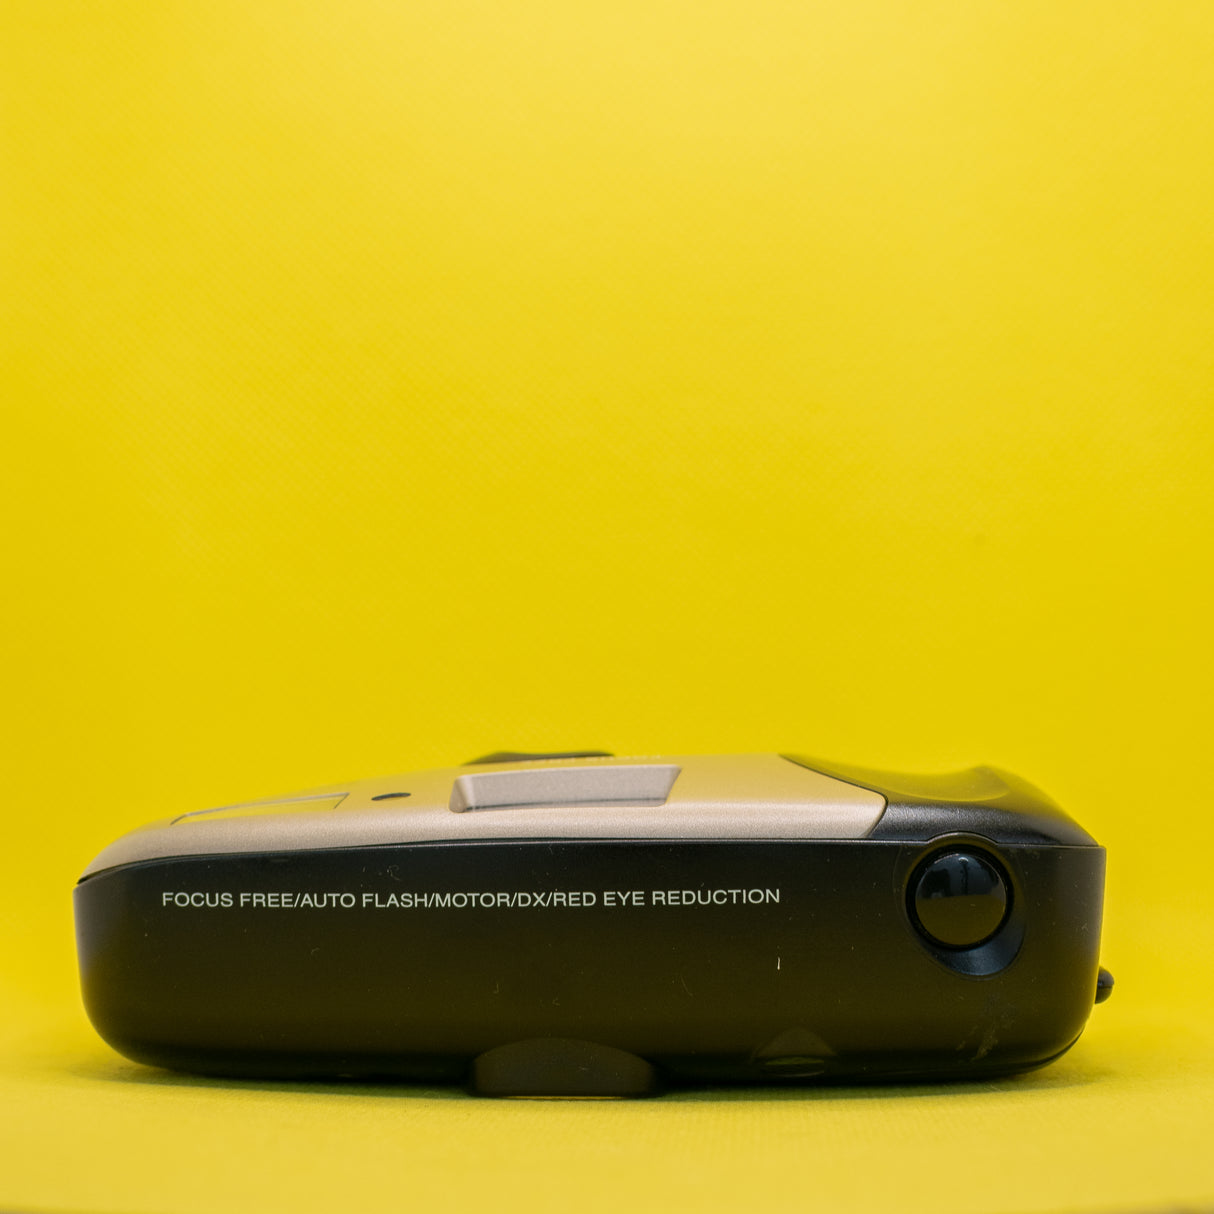 Polaroid 2100BF - 35mm Film Camera